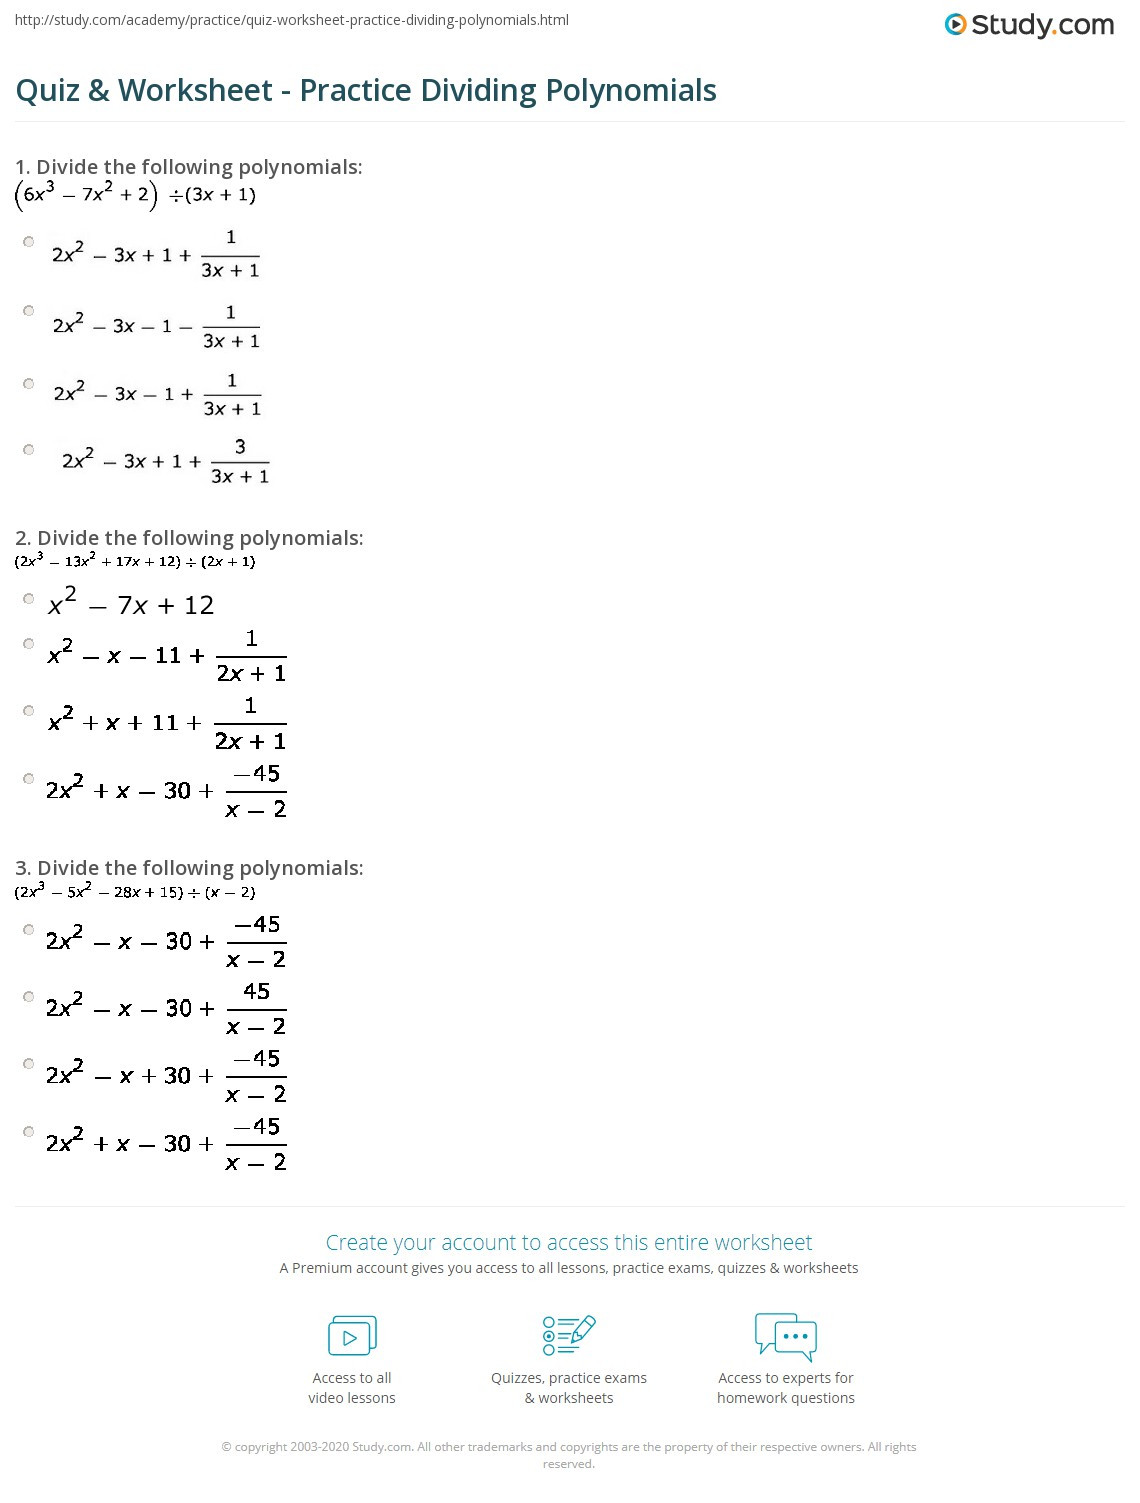 Long Division Polynomials Worksheet Quiz &amp; Worksheet Practice Dividing Polynomials